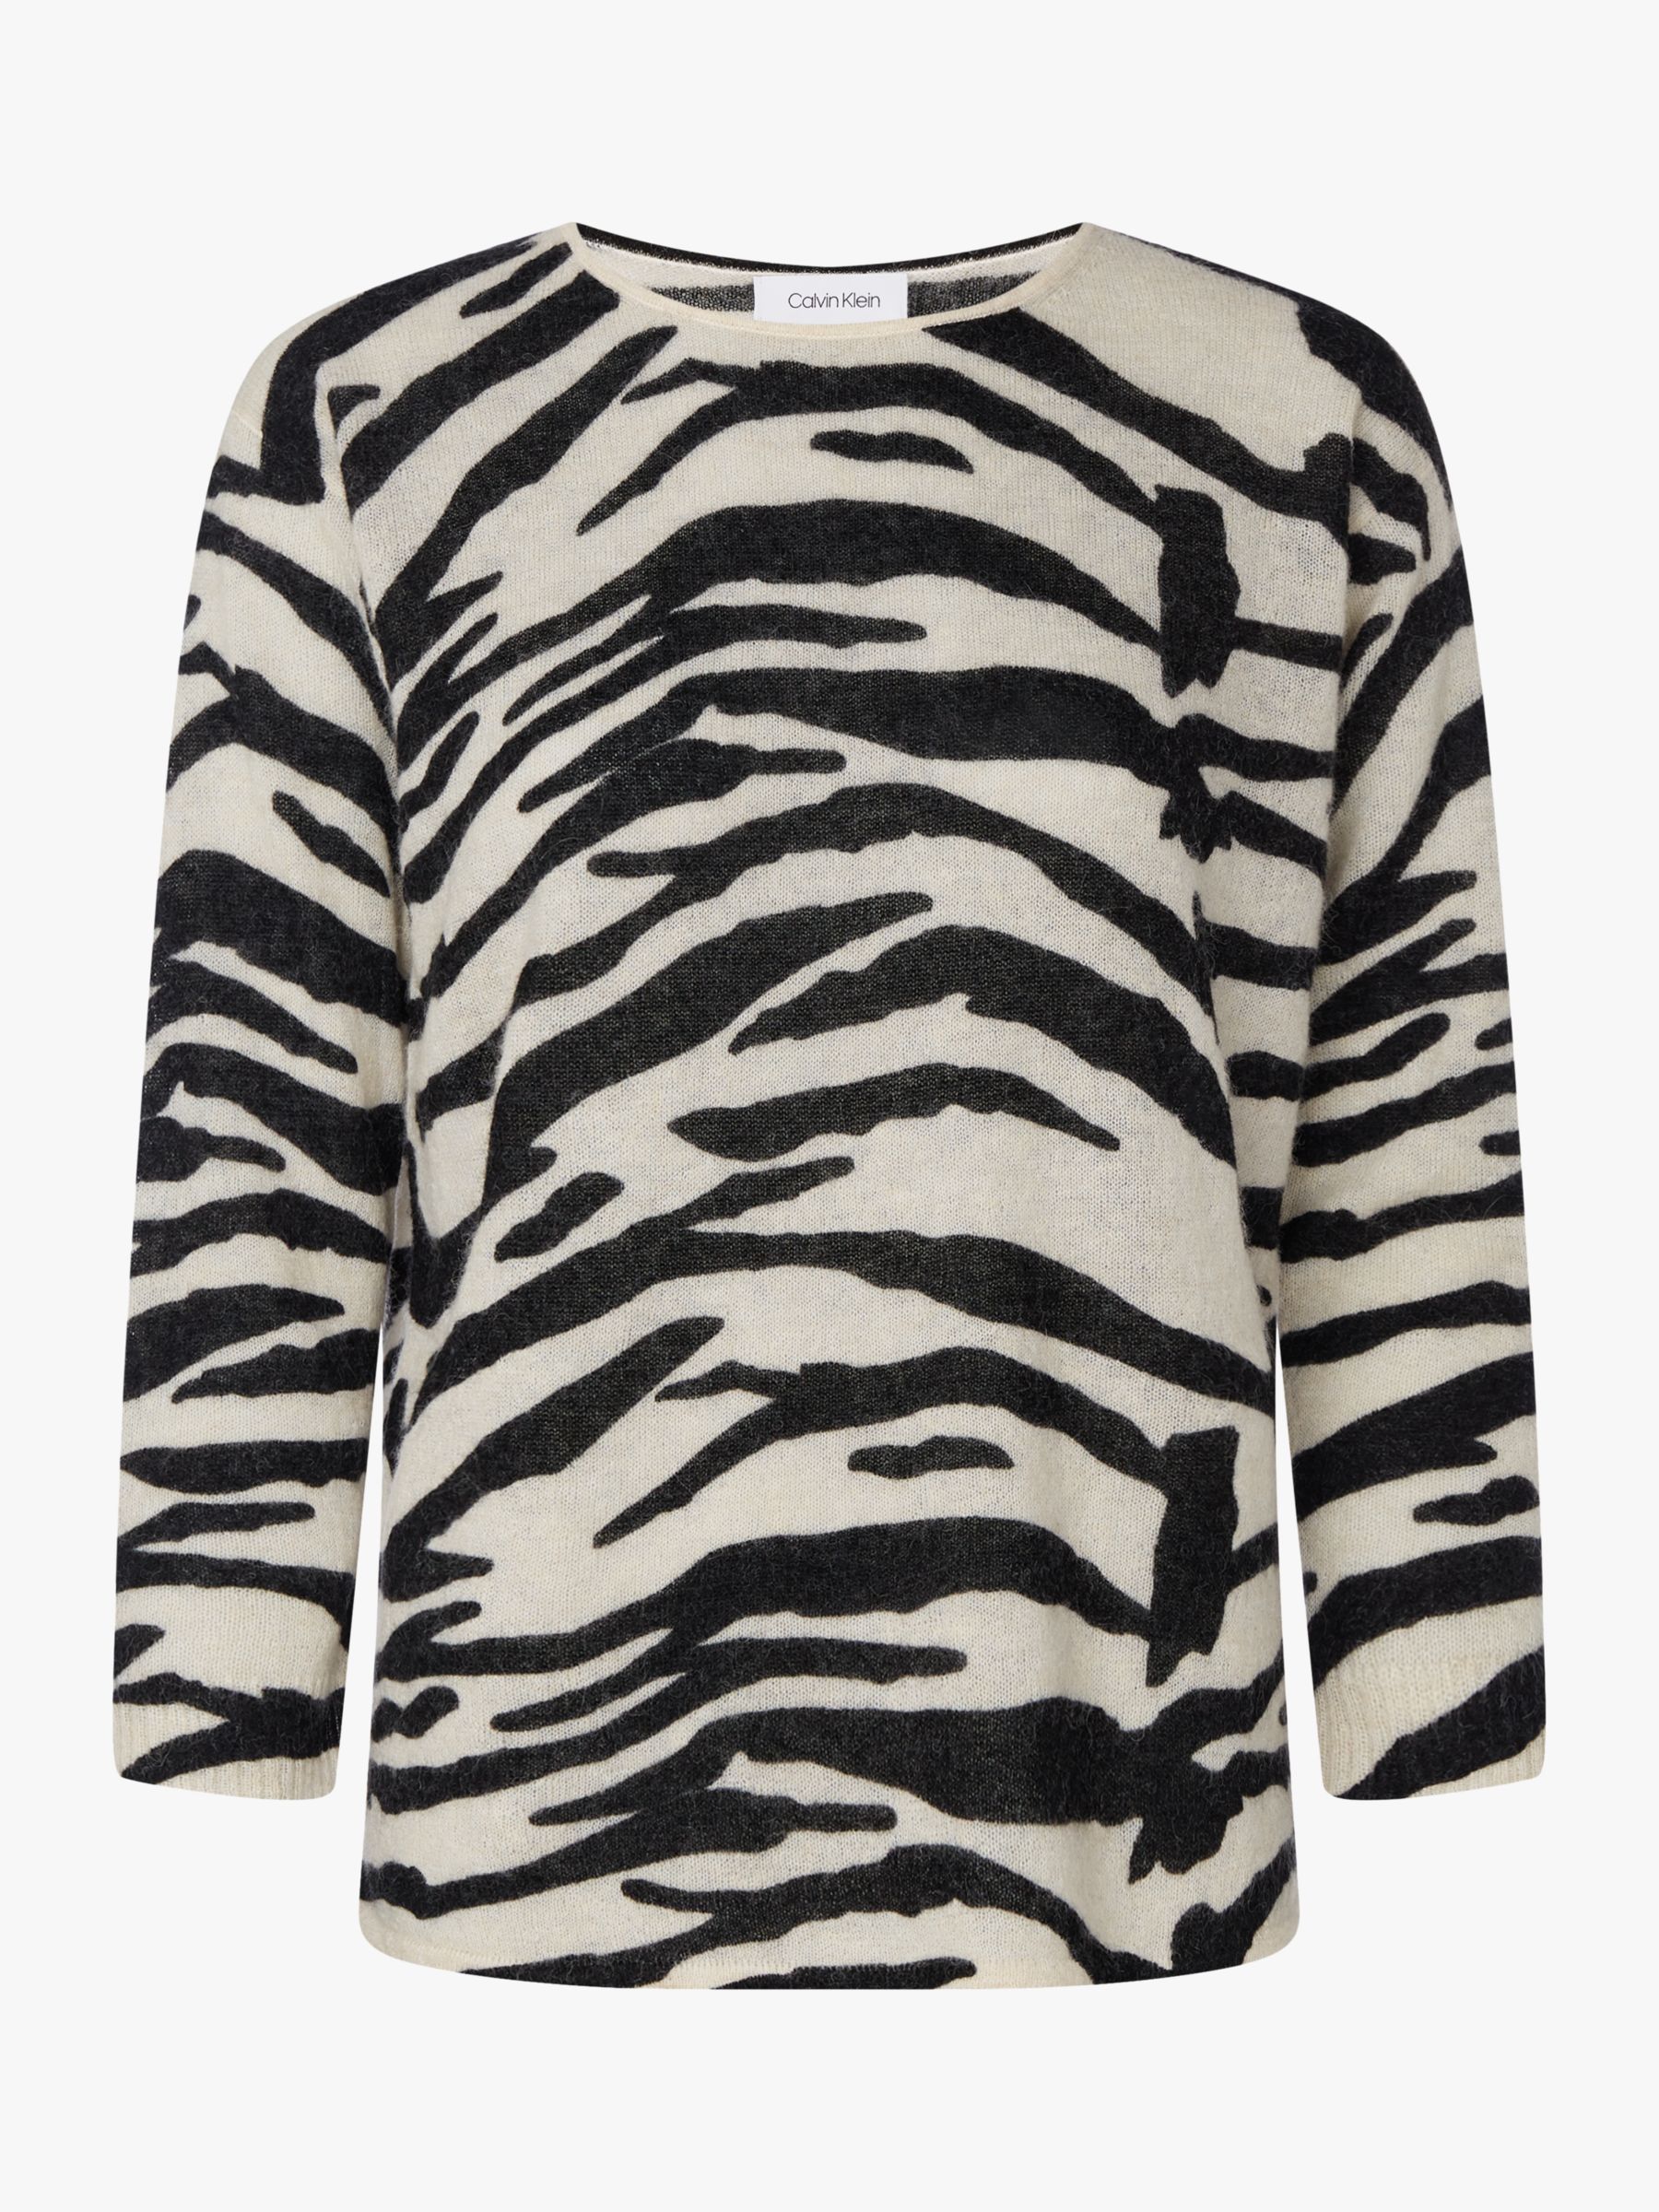 Calvin Klein Alpaca Blend Zebra Jumper, Zebra/Black/White